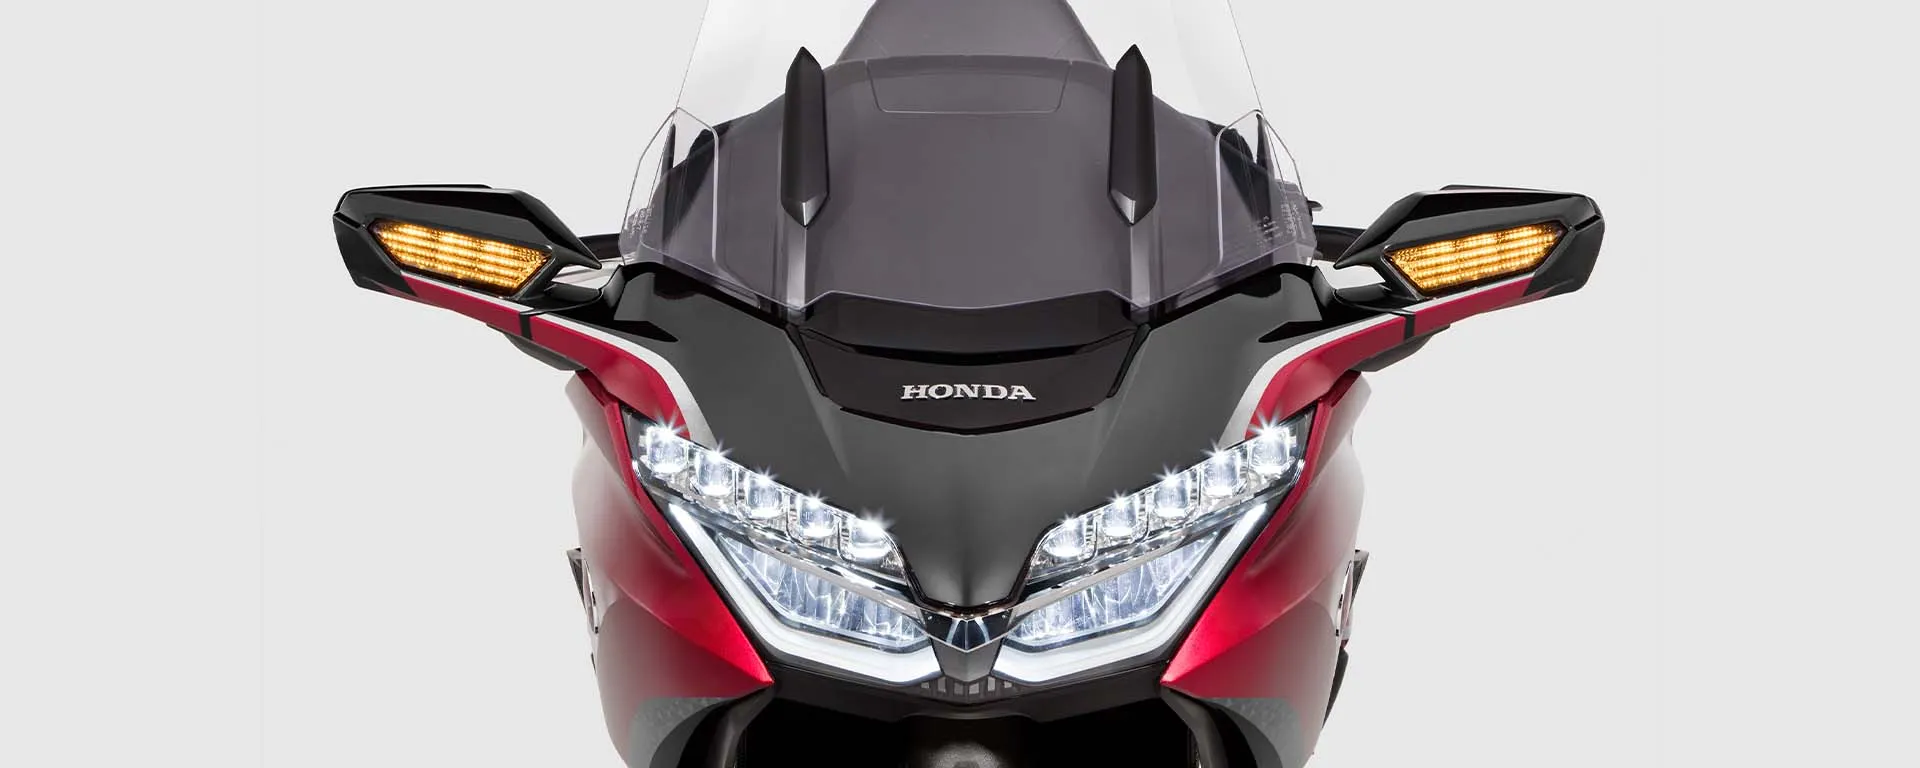 Iluminação Full Led da Honda GL 1800 Gold  Wing Tour